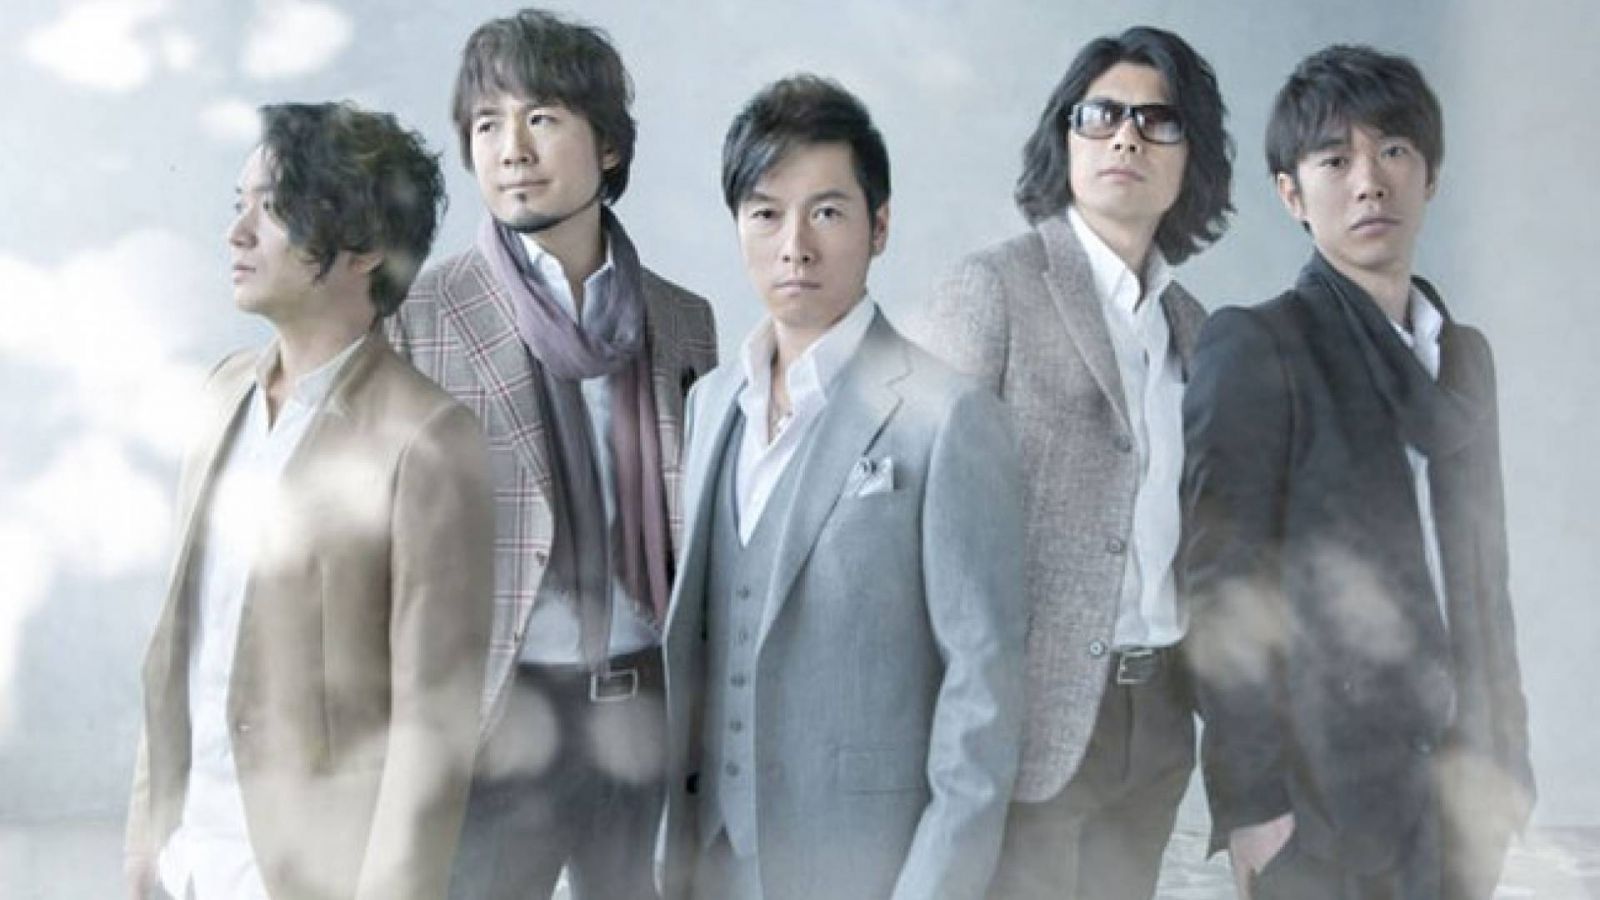 The Gospellers © Sony Music Entertainment (Japan) Inc.